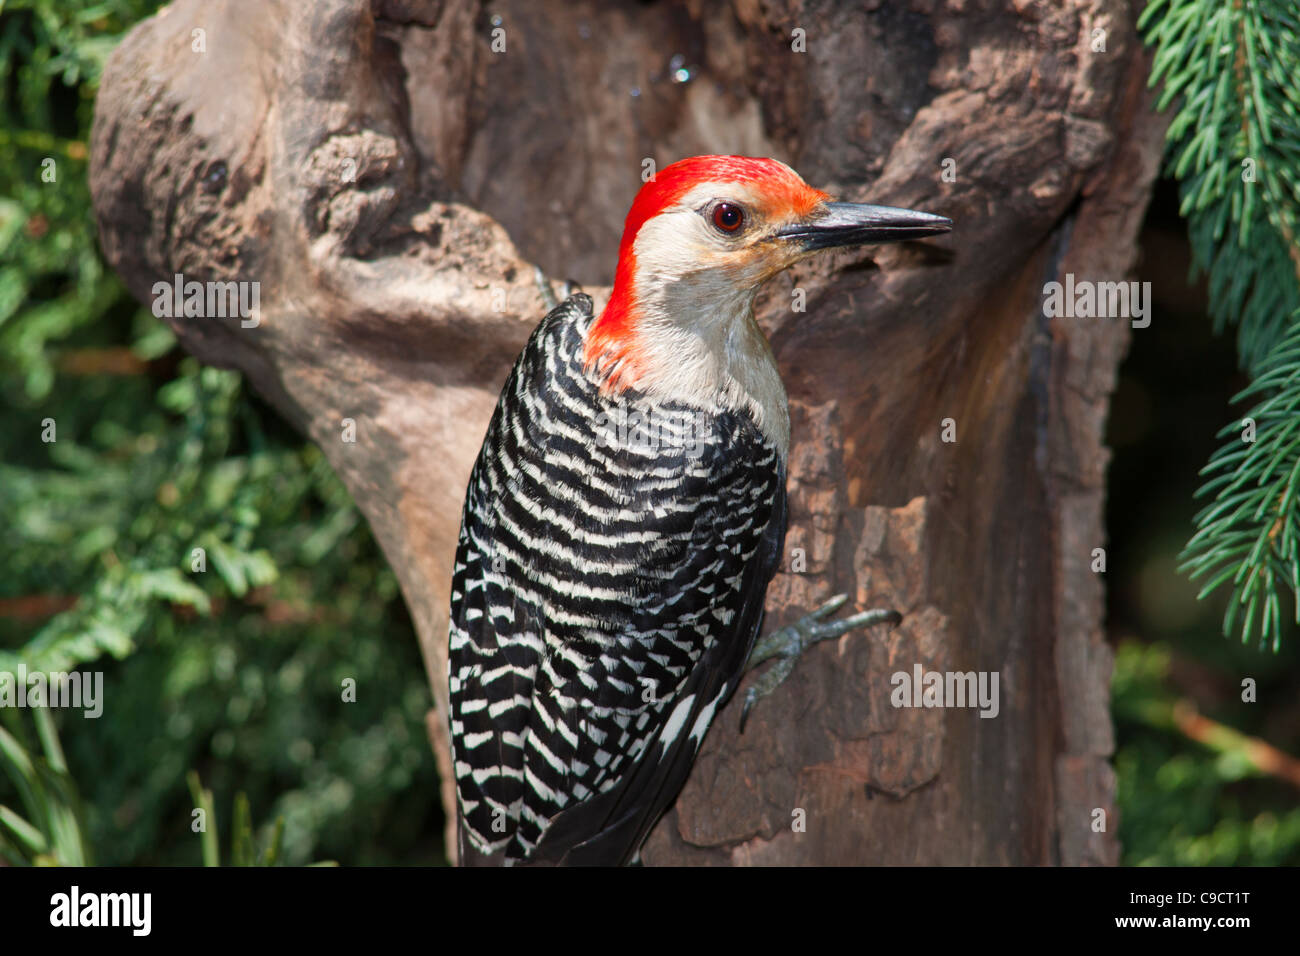 Red-bellied Woodpecker, Melanerpes carolinus, in backyard wildlife habitat in McLeansville, North Carolina. Stock Photo